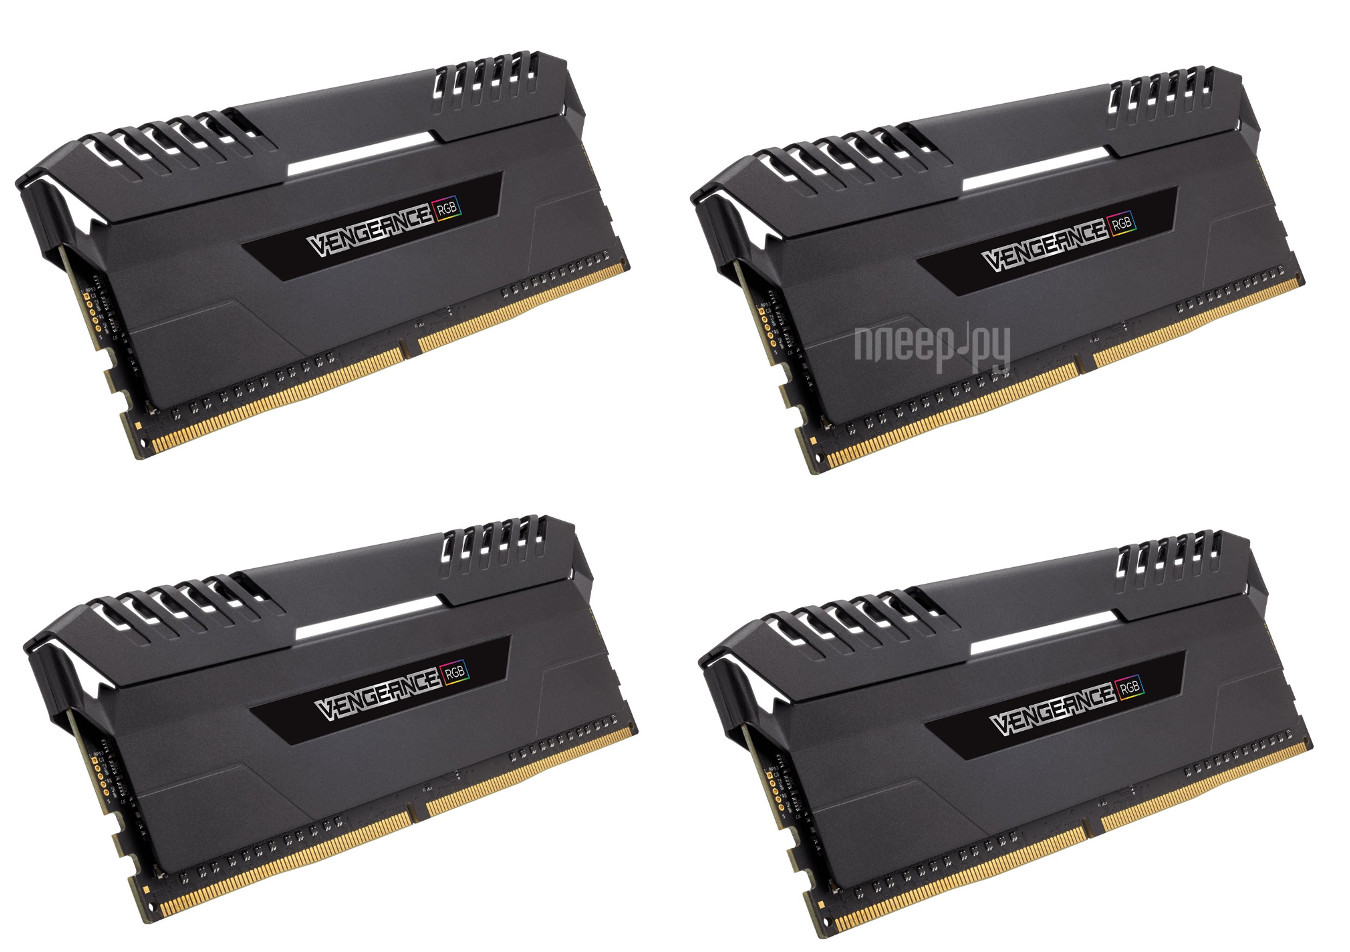   Corsair Vengeance RGB DDR4 DIMM 3333MHz PC4-26600 CL16 - 32Gb KIT (4x8Gb) CMR32GX4M4C3333C16 